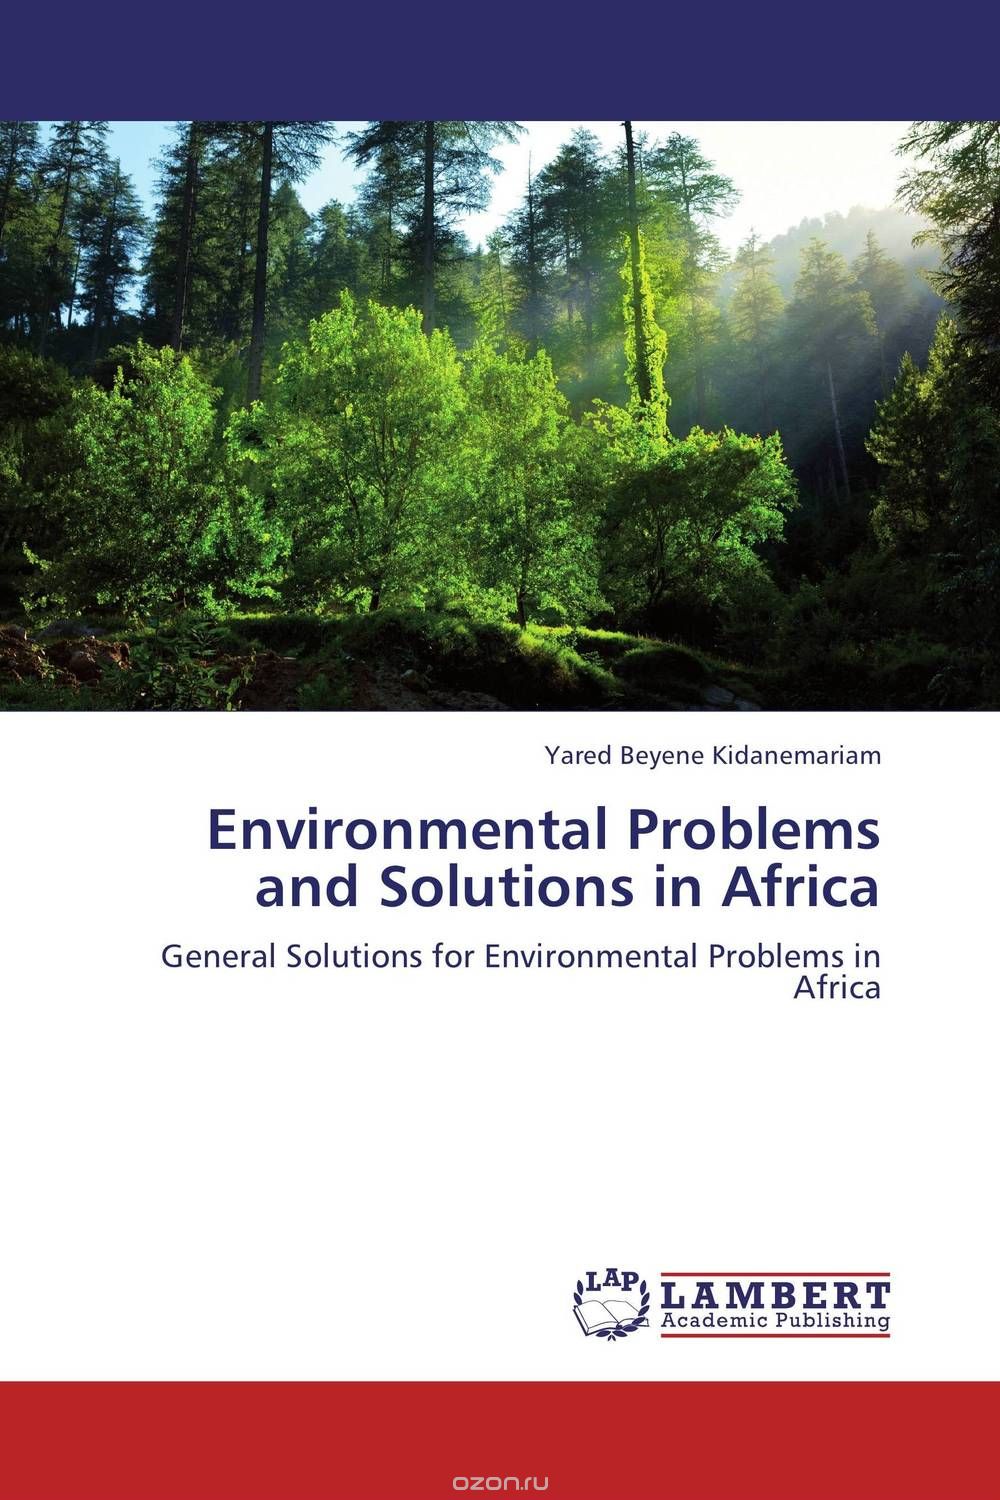 Скачать книгу "Environmental Problems and Solutions in Africa"